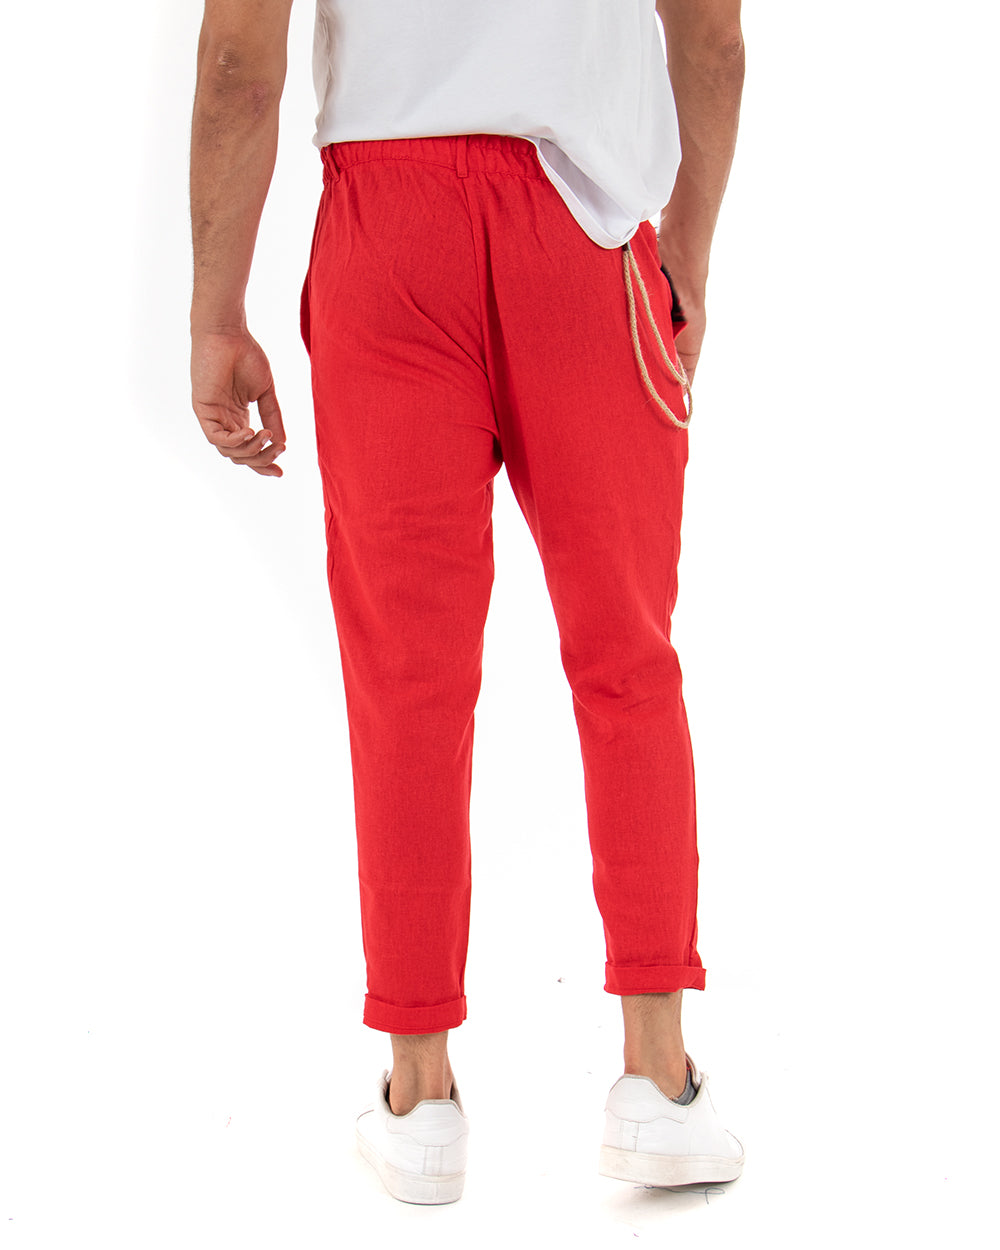 Pantaloni Uomo Lino Tinta Unita Rosso Elegante Tasca America Con Pinces GIOSAL-P3838A